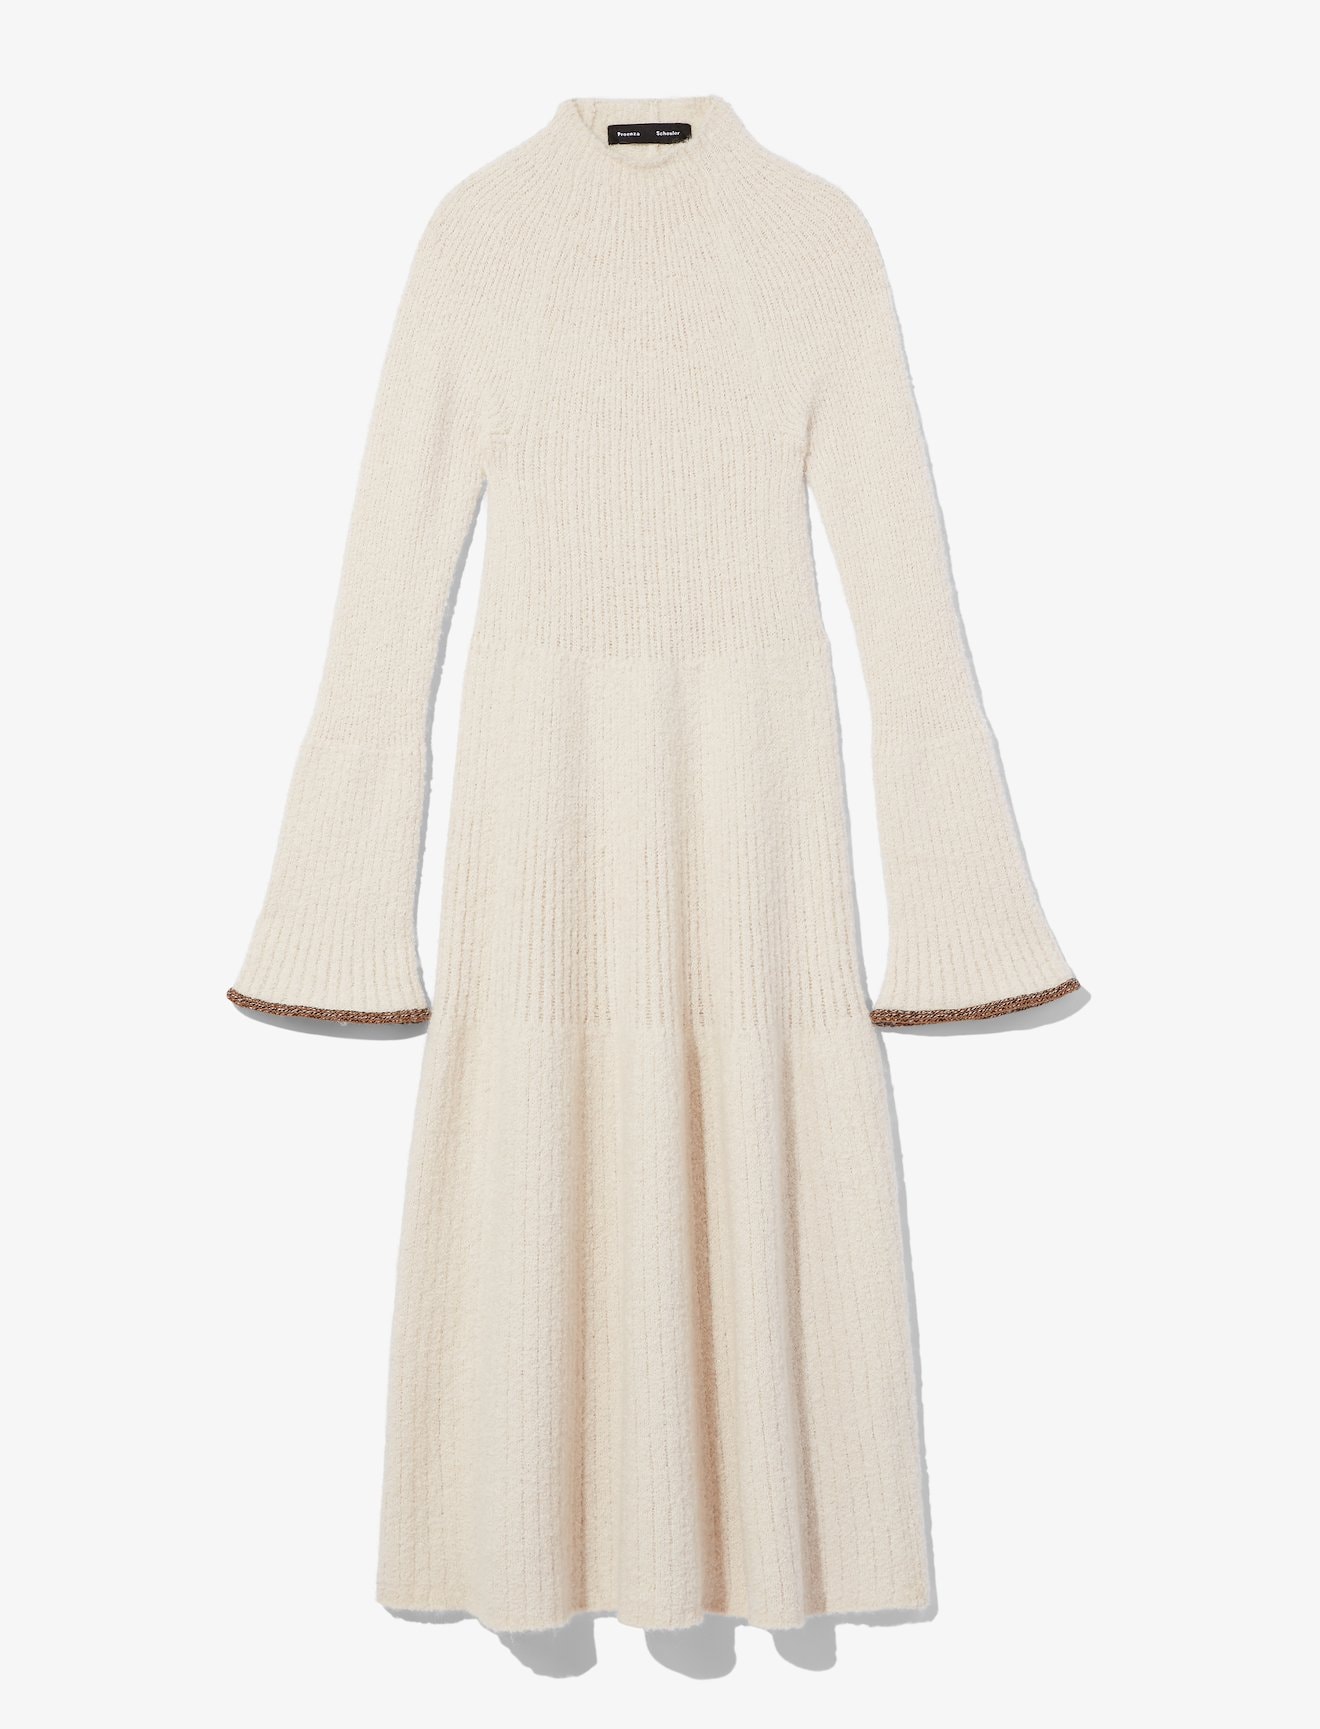 Textured Knit Dress in white | Proenza Schouler